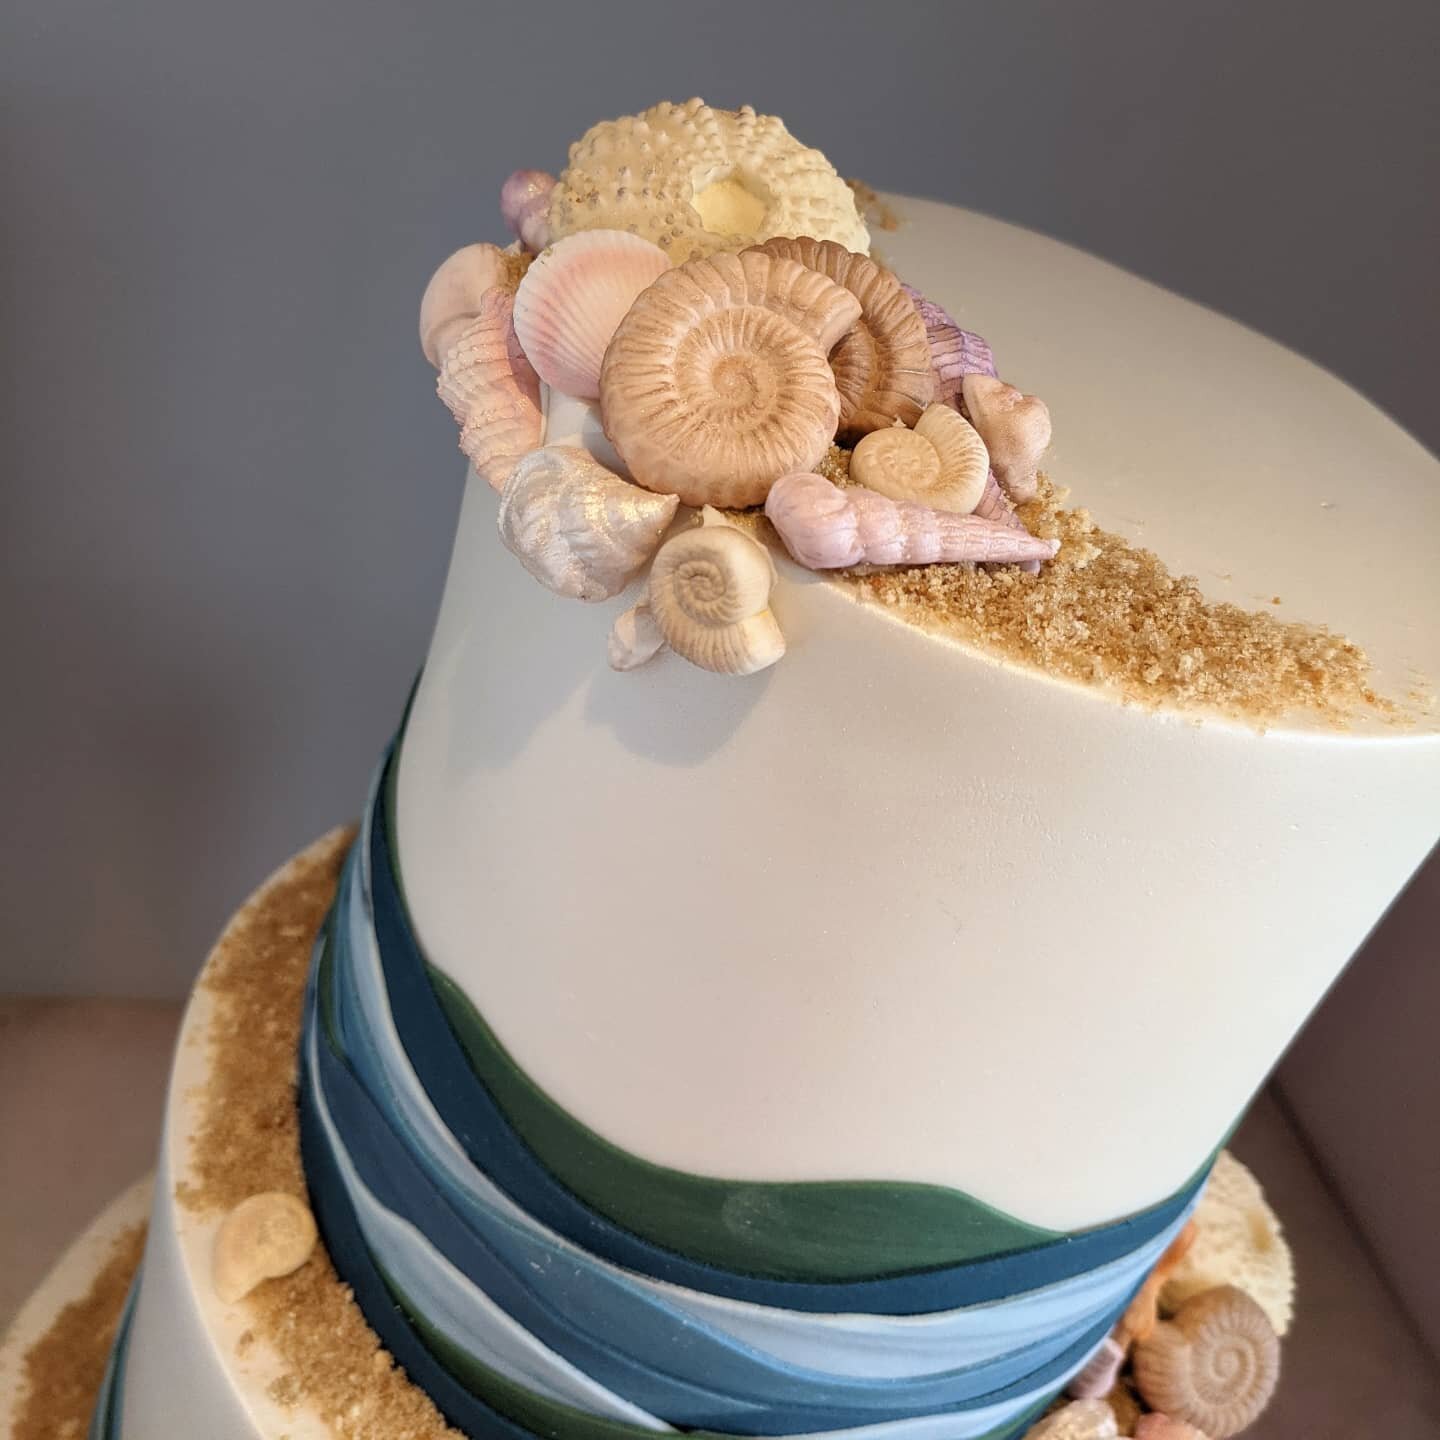 Gorgeous beach/shell/fossil themed wedding cake for Mary and Rob 😍
.
#beach #seaside #shells #weddingcake #sunnierdaysarecoming #sunshine #thepinkcakebox #shottlehall #derbyshirewedding #peakdistrictwedding #weddingcakedesign #weddingcakeideas